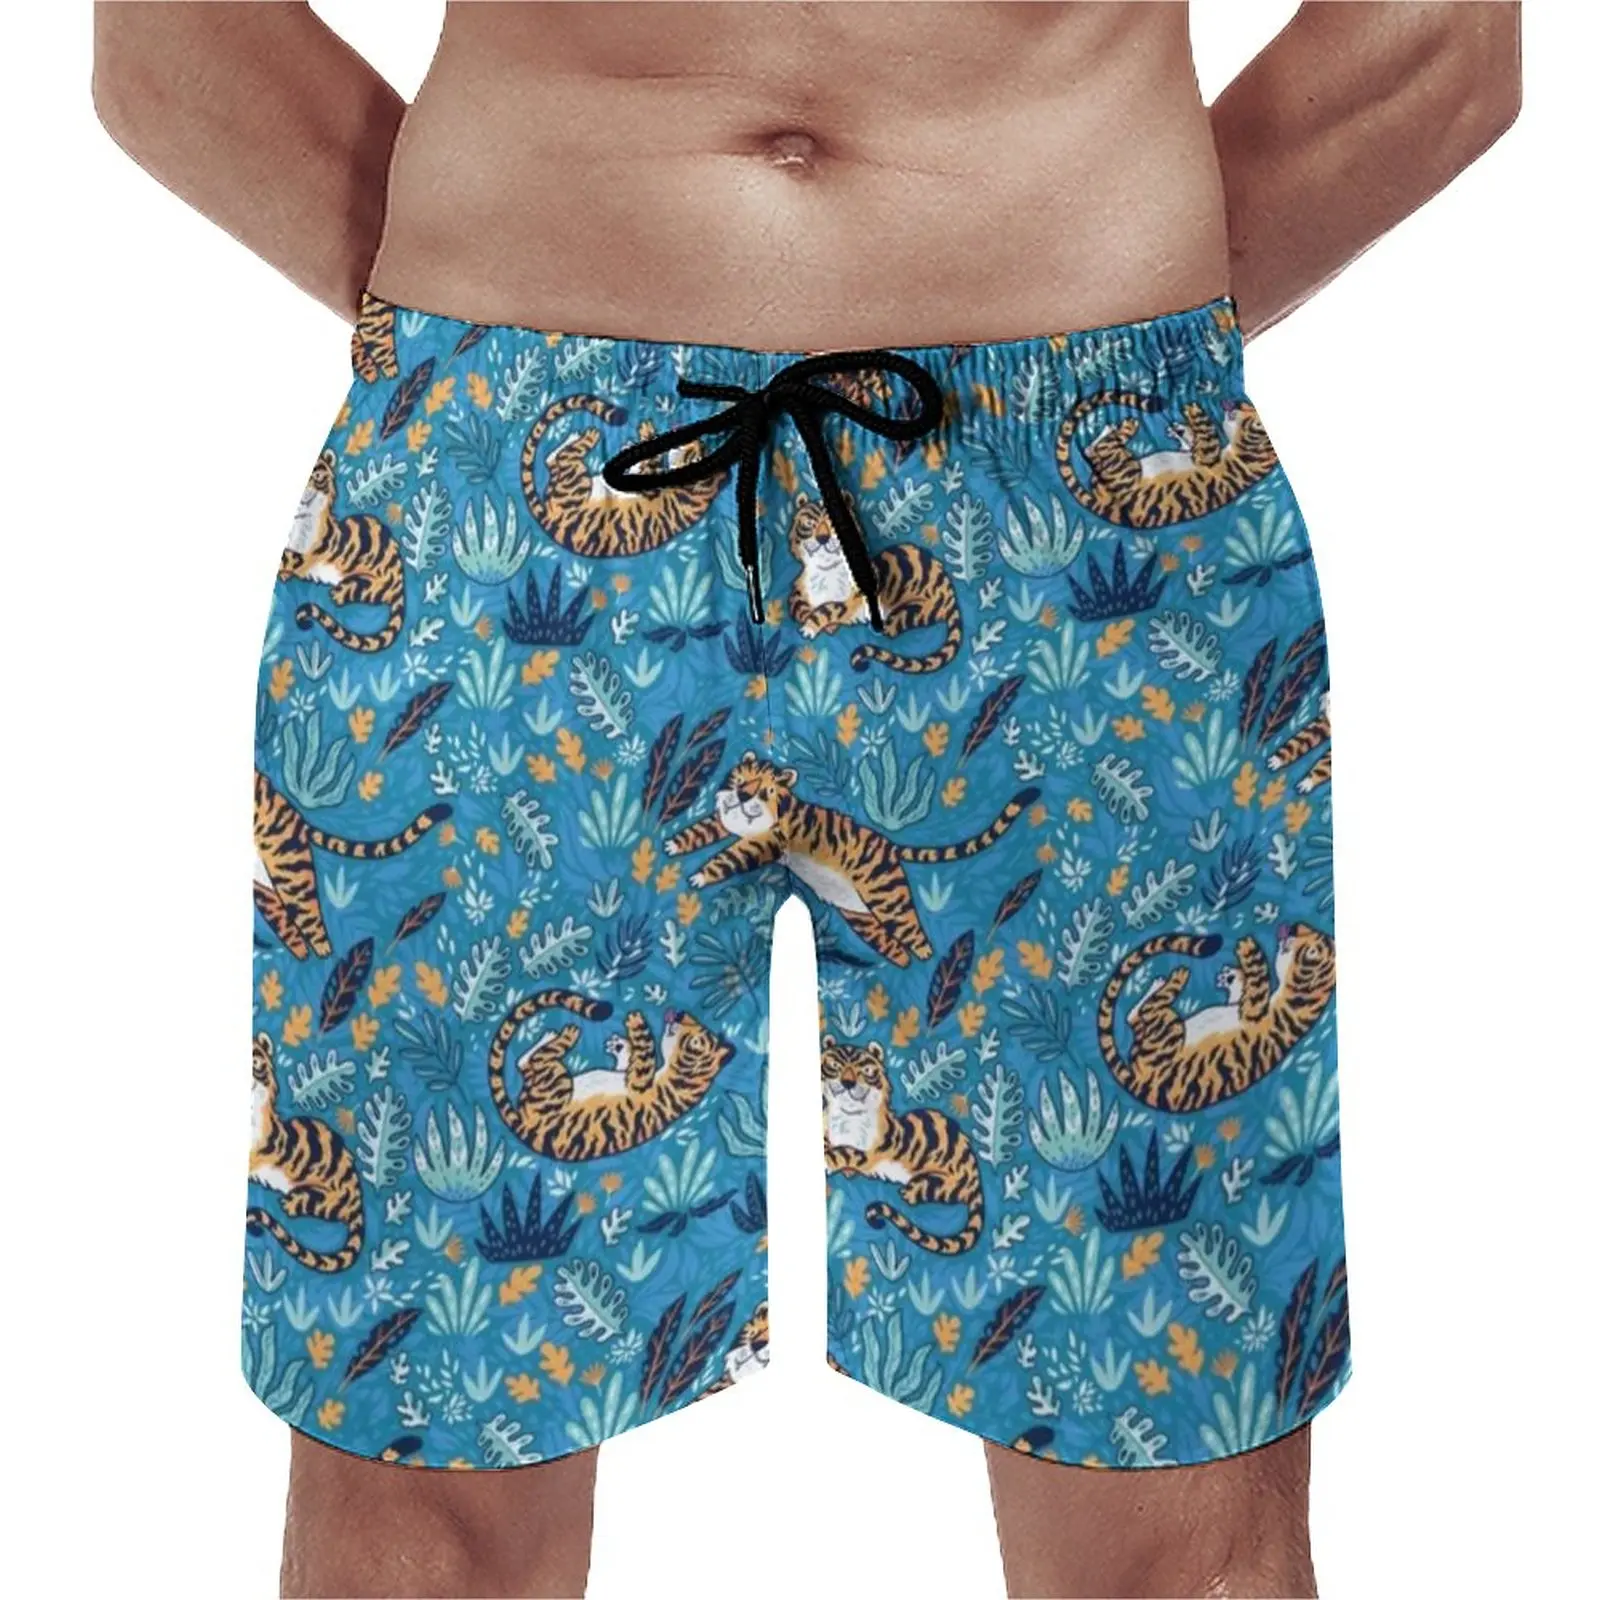 

Summer Board Shorts Wild Tiger Running Surf Jungle Leaf Print Design Beach Short Pants Classic Quick Dry Swimming Trunks